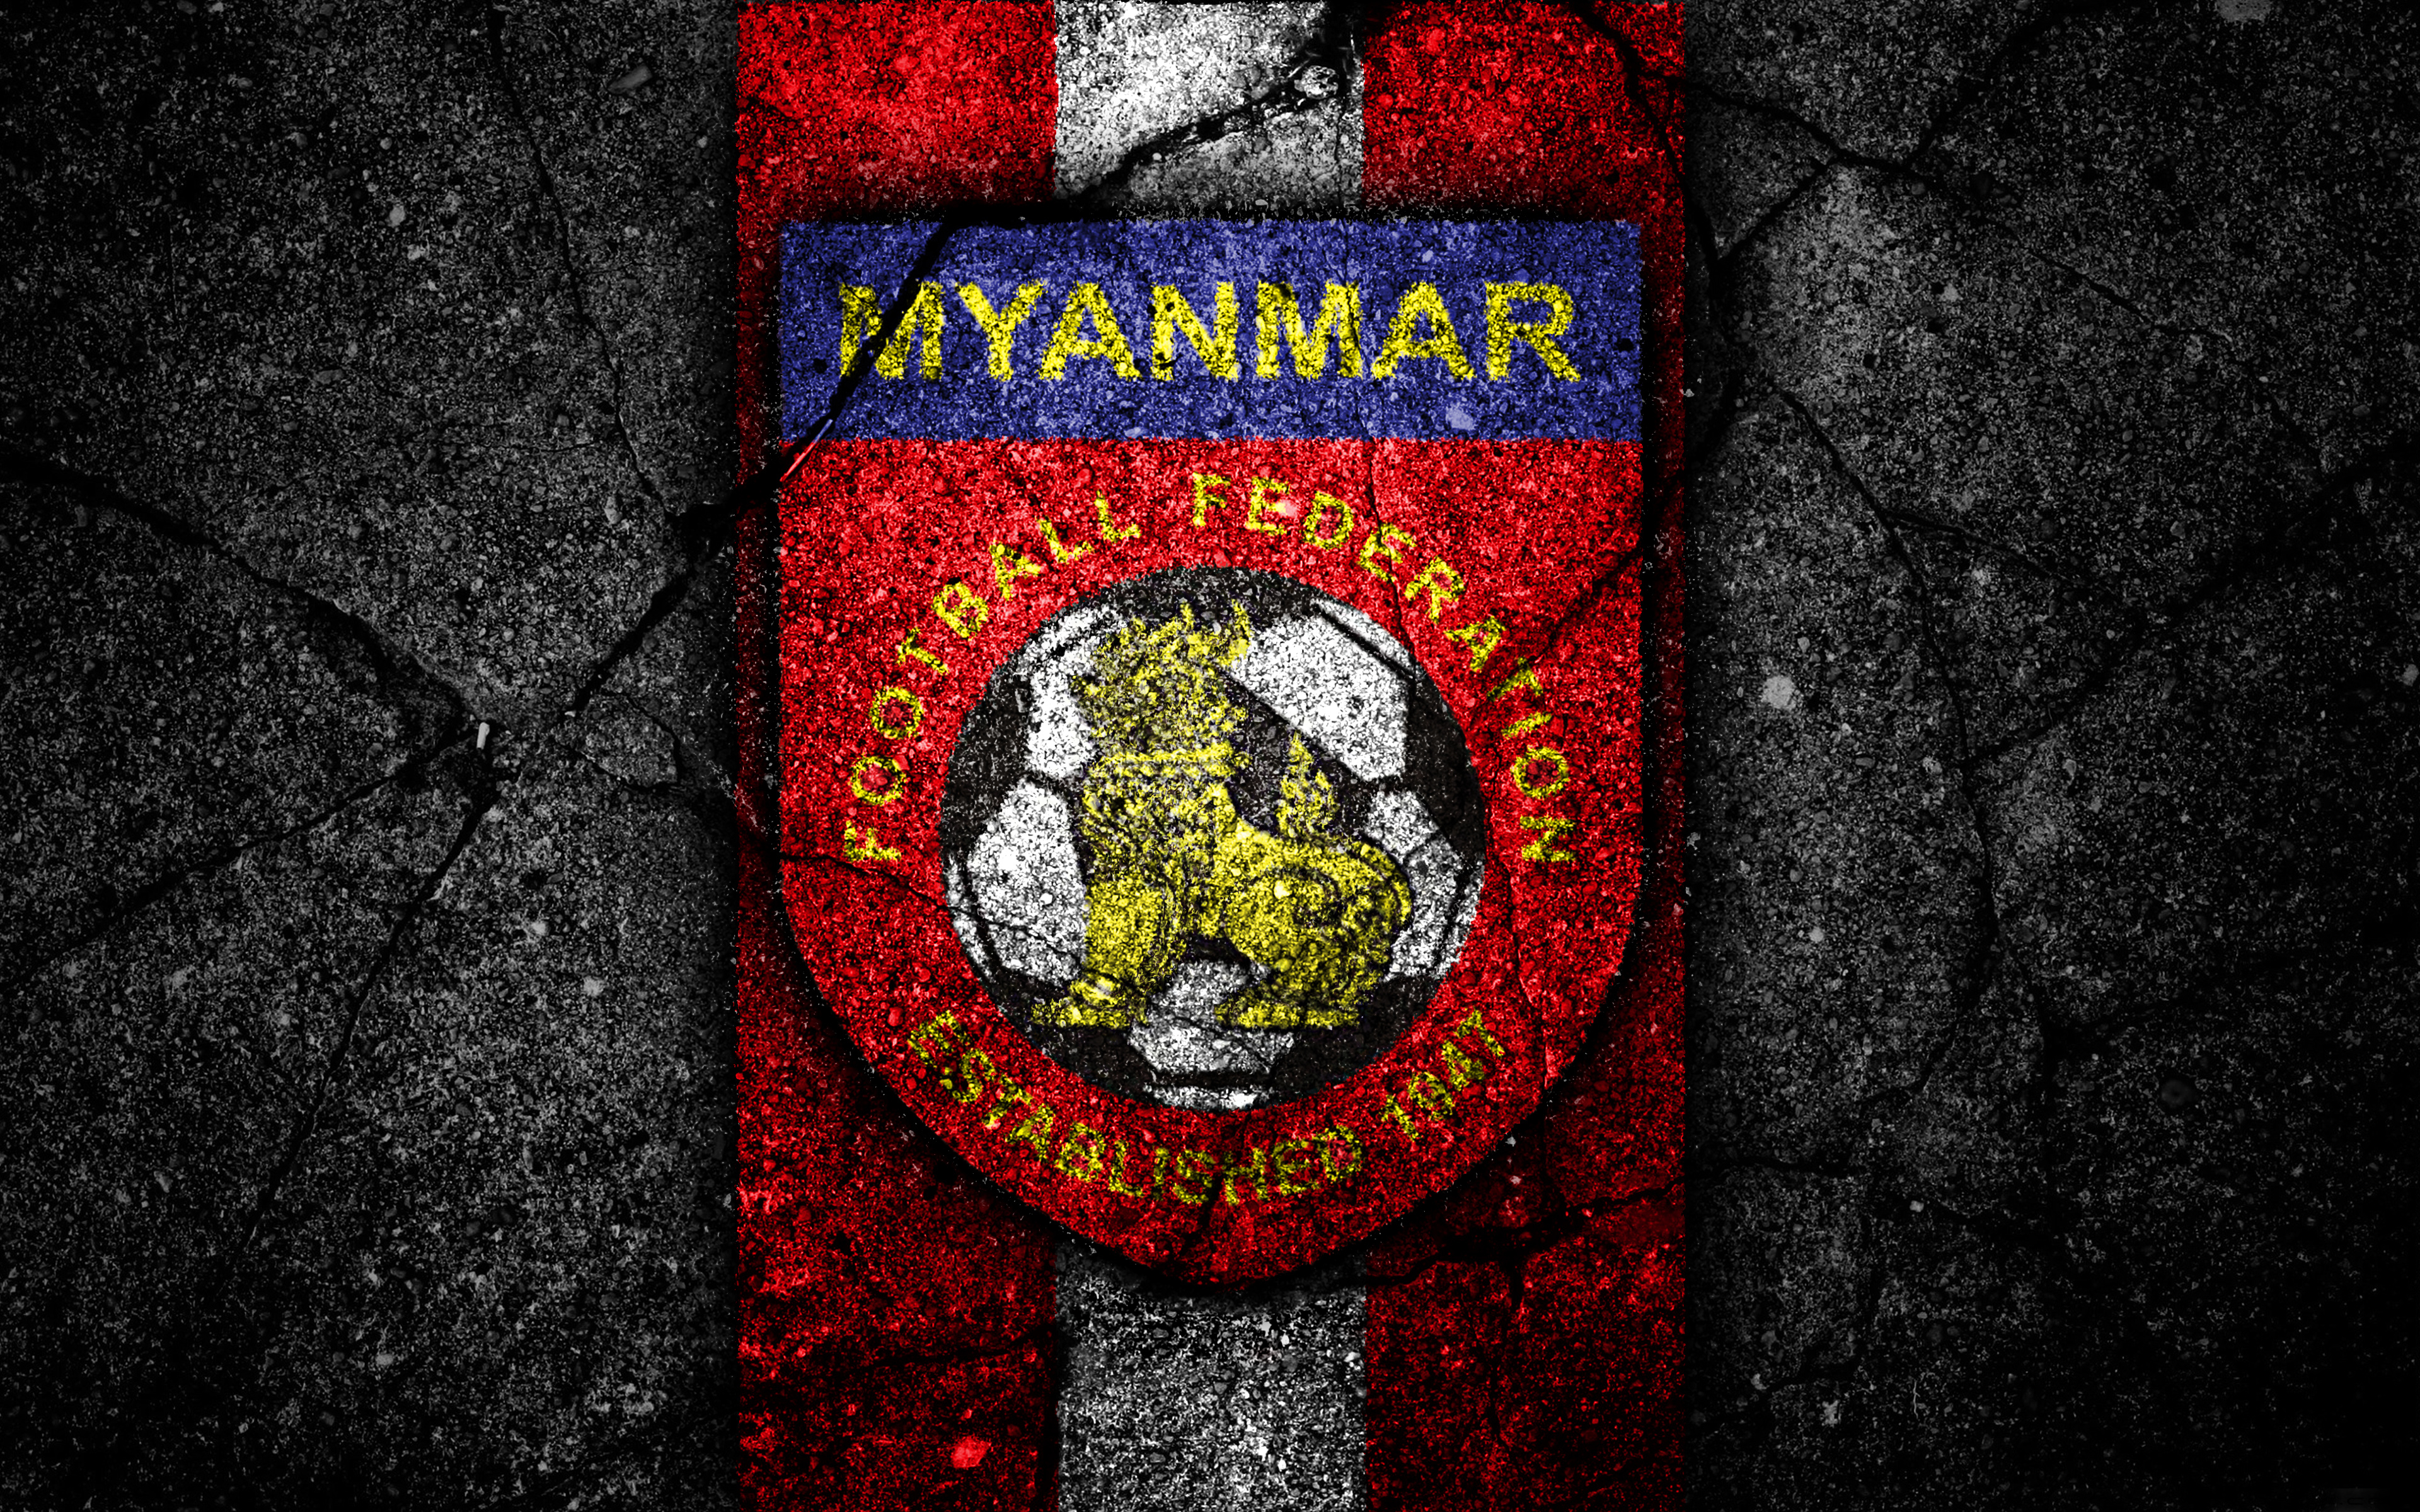 Myanmar National Football Team Wallpapers